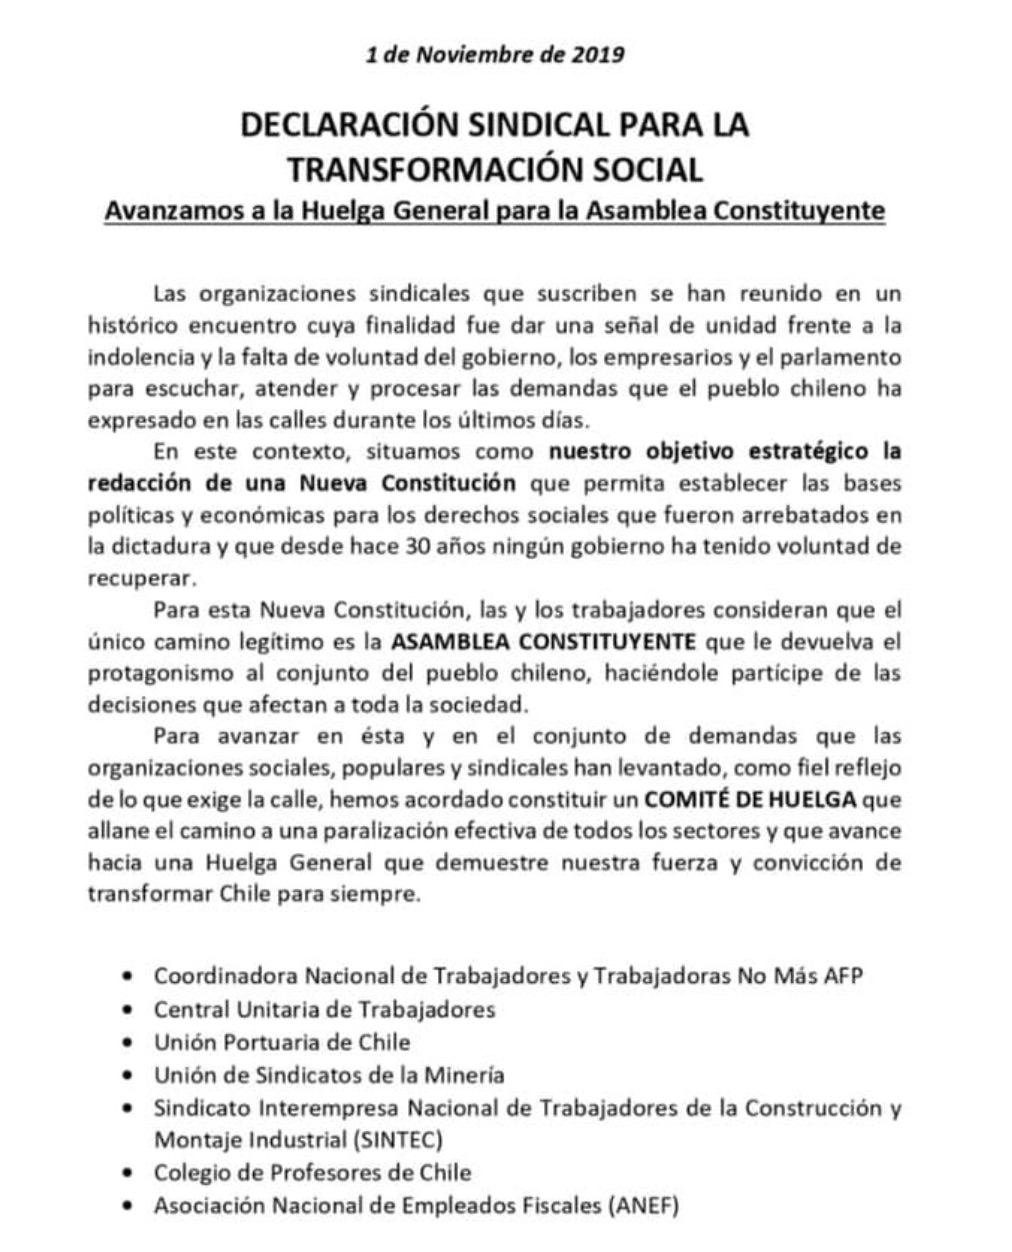 Chile: Trade union declaration for social transformation